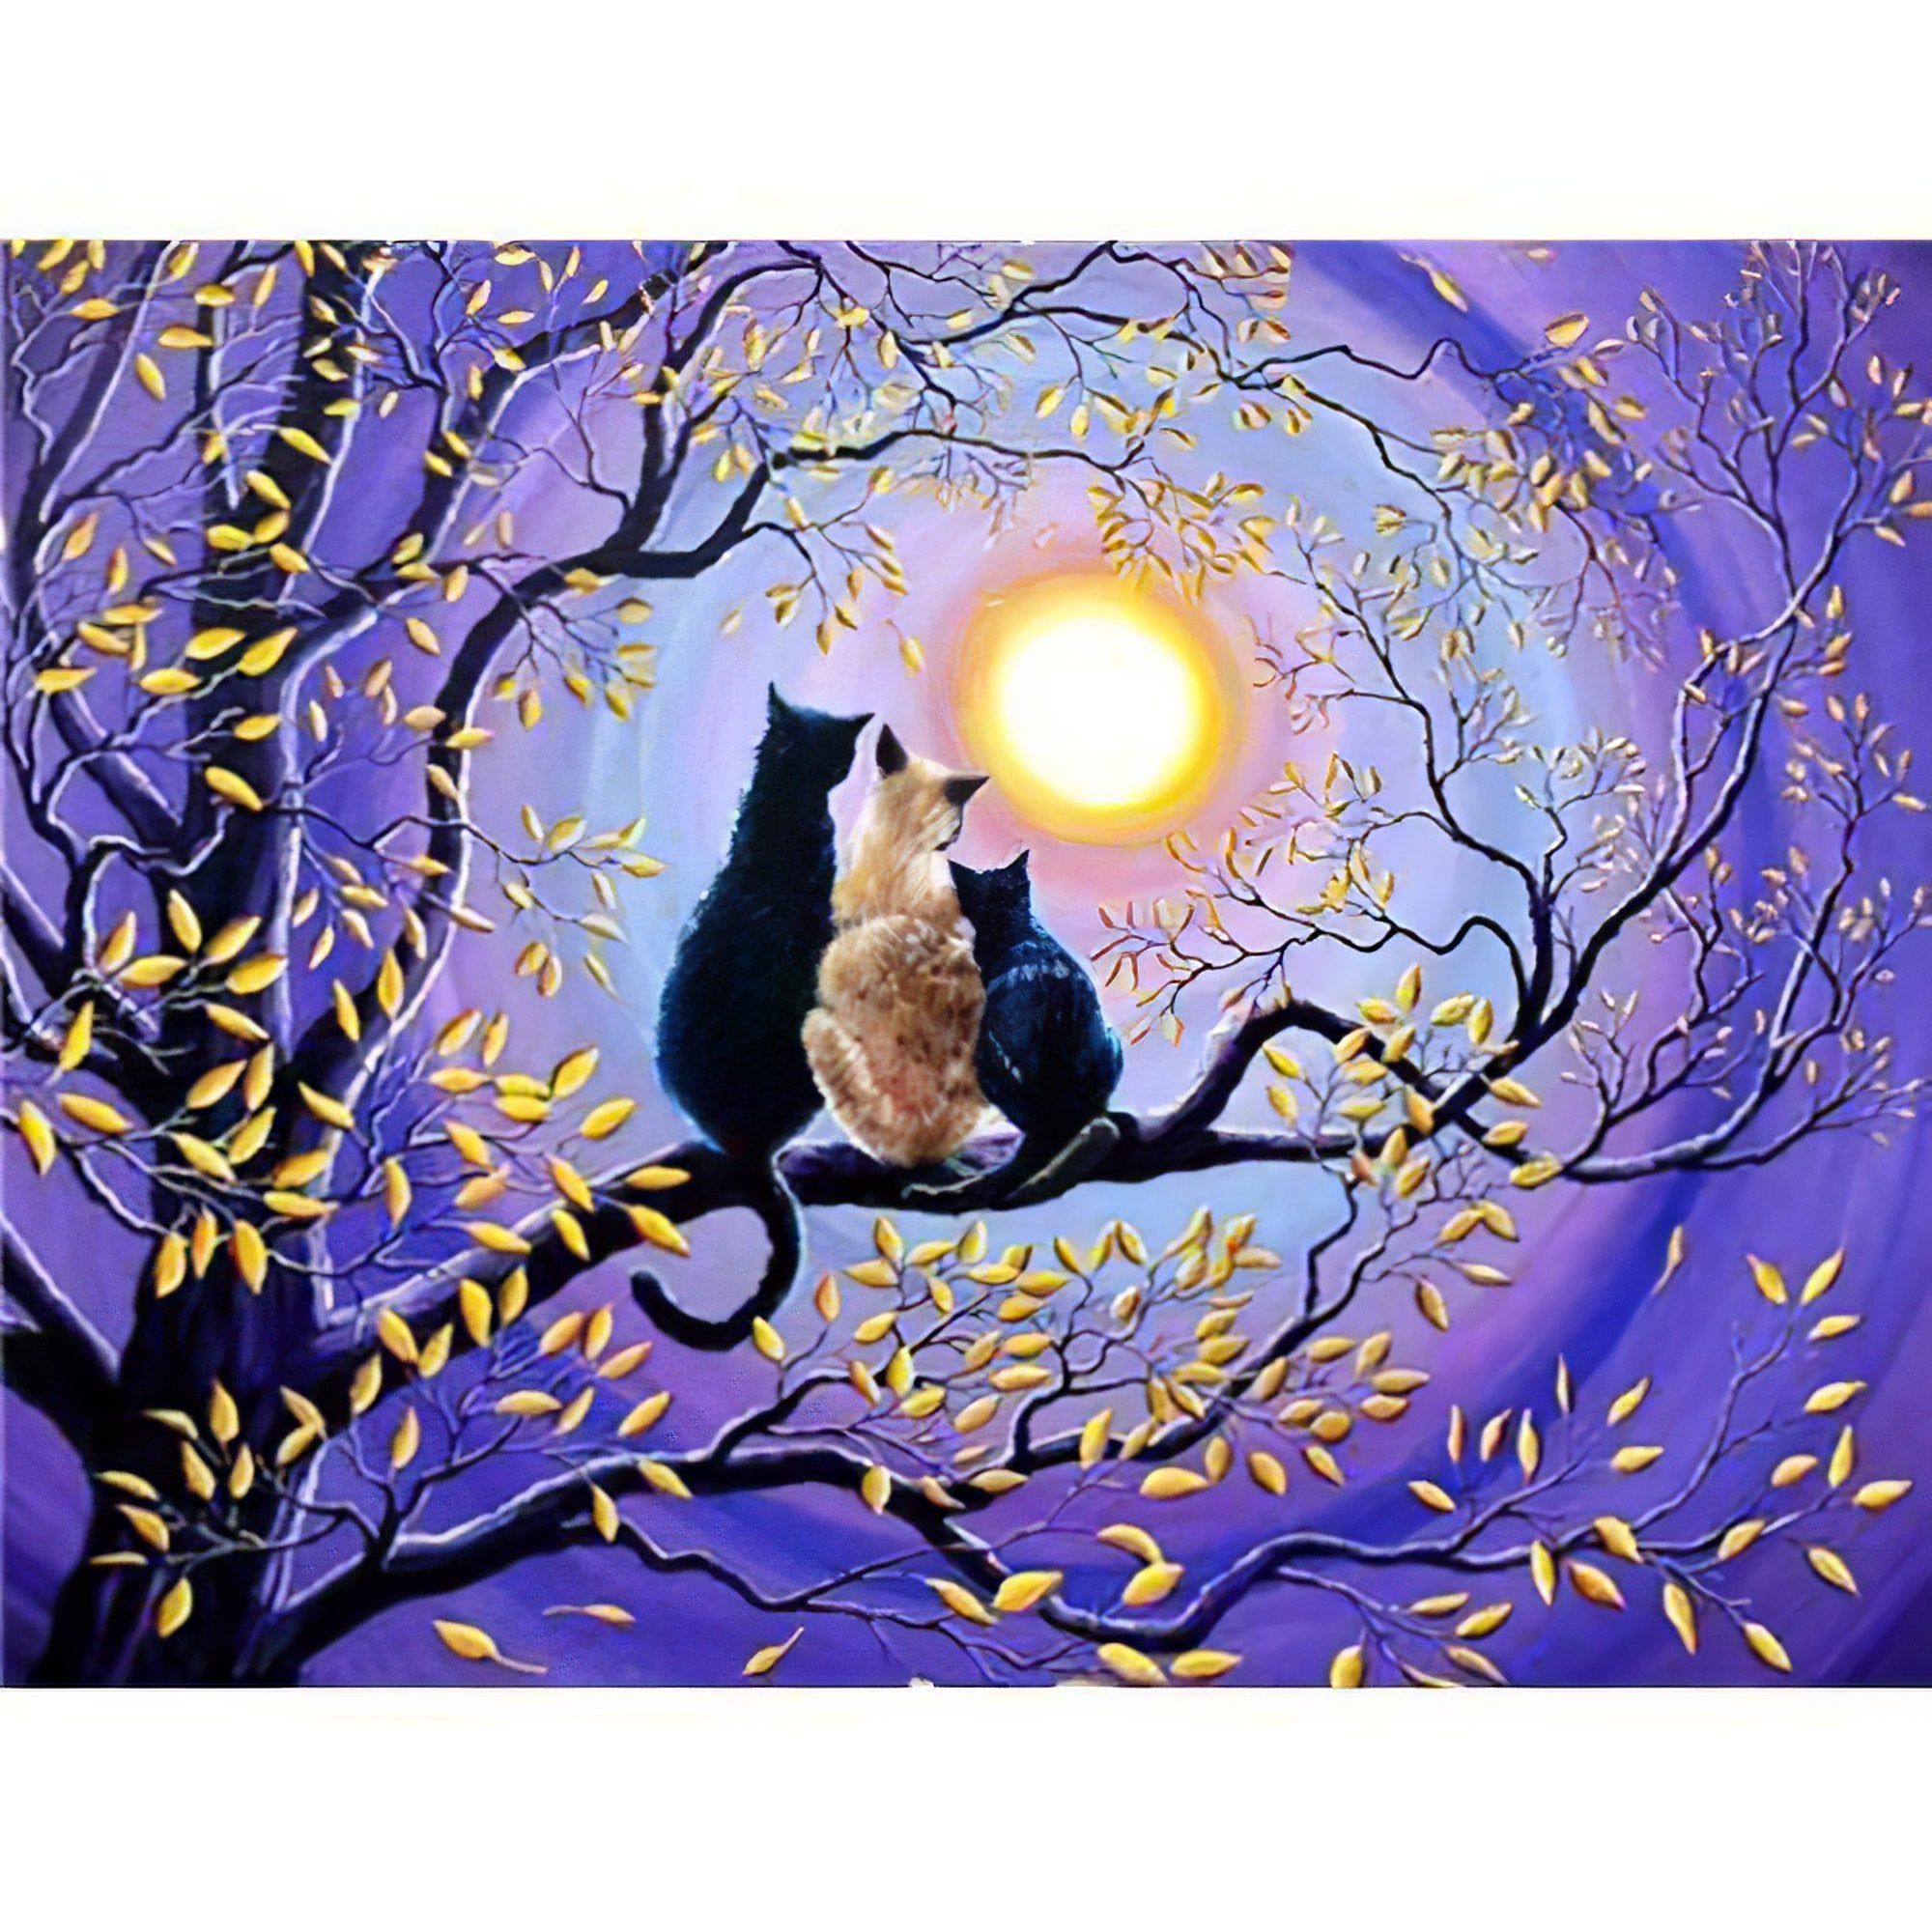 Three Cats On The Tree Under The Moon